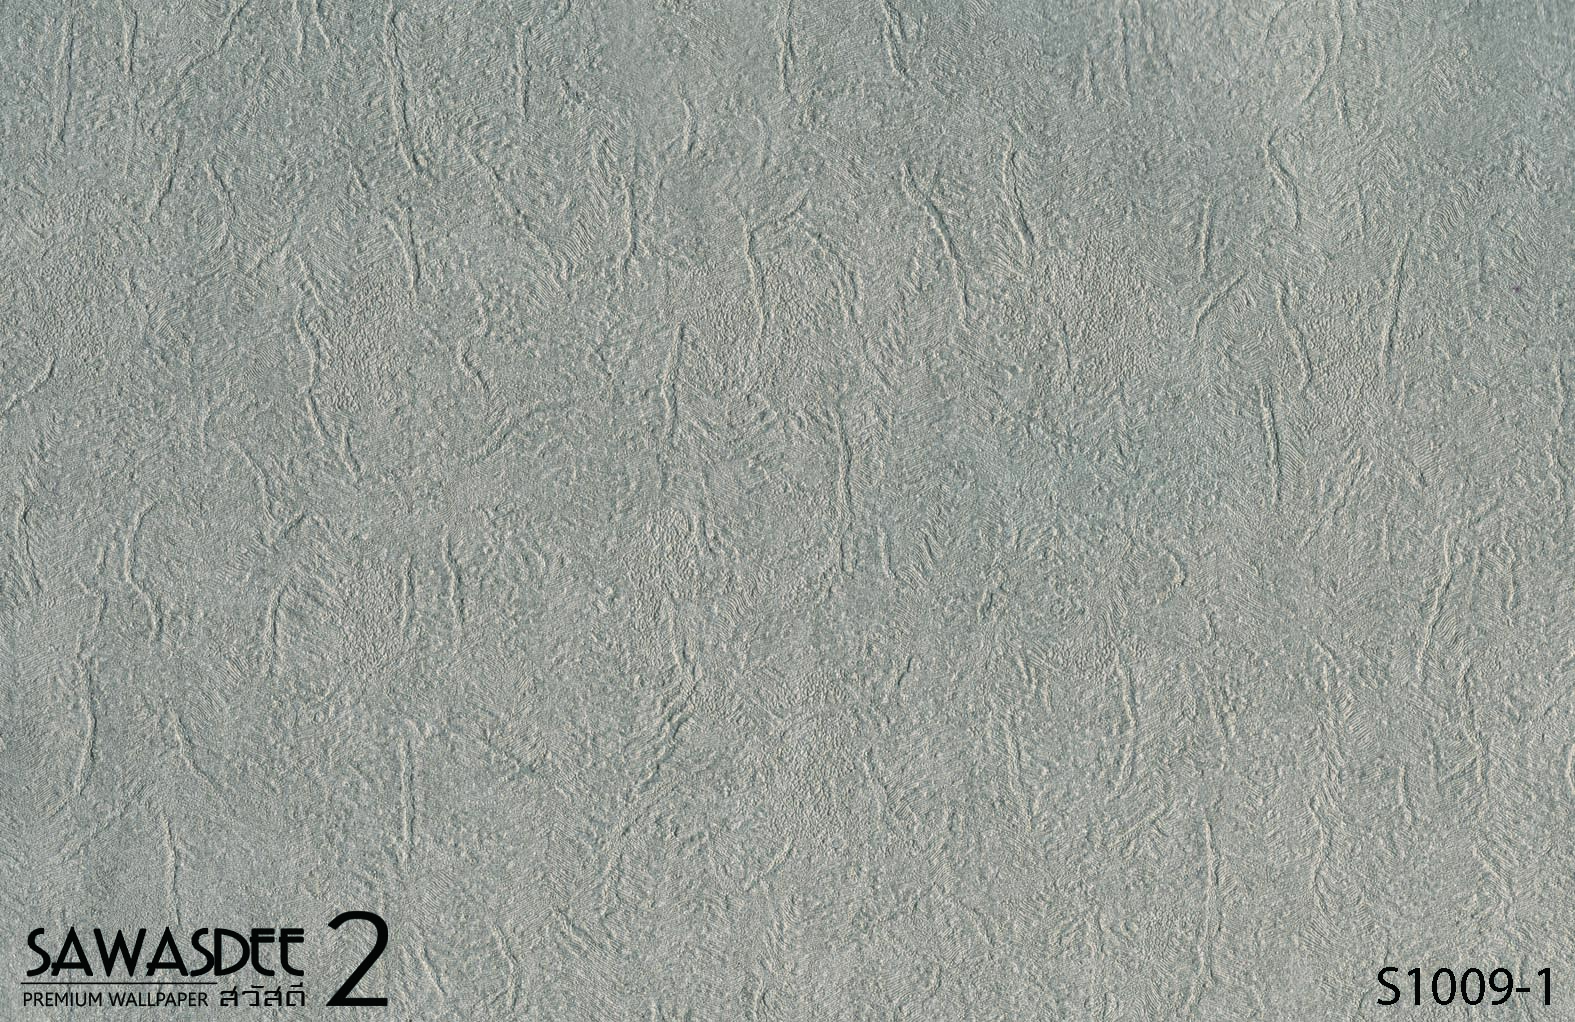 Wallpaper (SAWASDEE 2) S1009-1